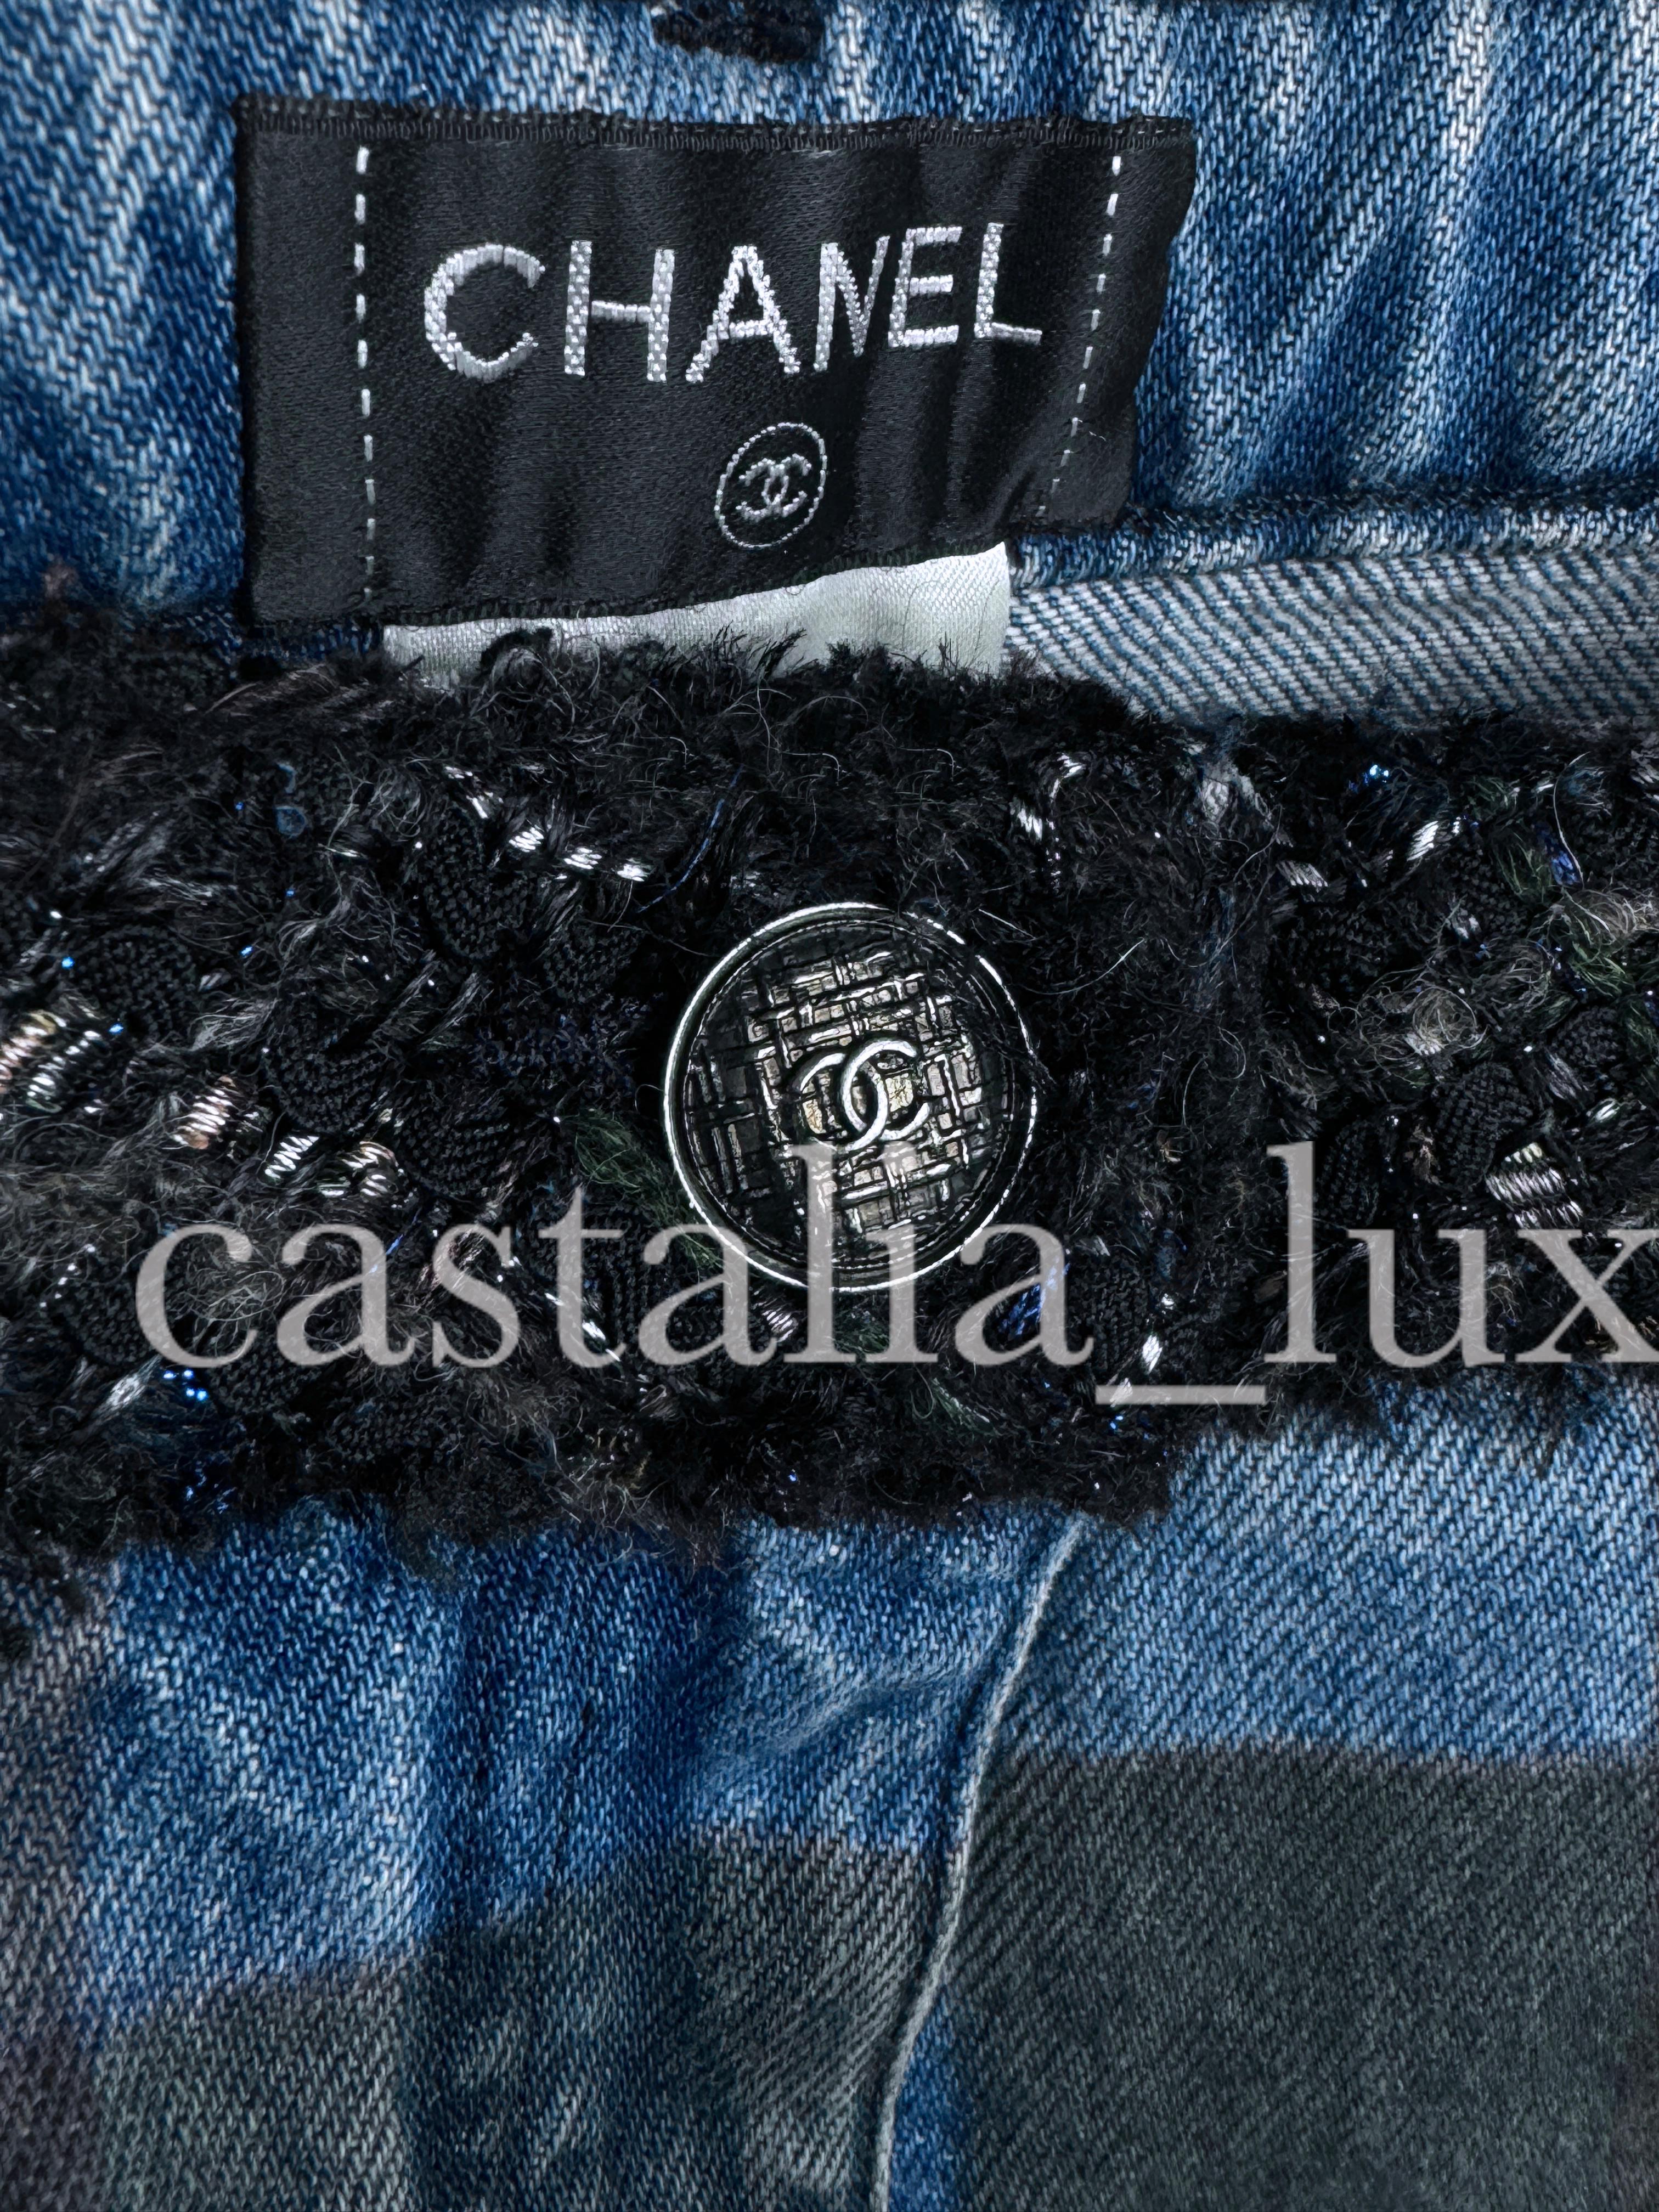 Chanel New Iconic Paris / Edinburgh Runway Tartan Jeans For Sale 5